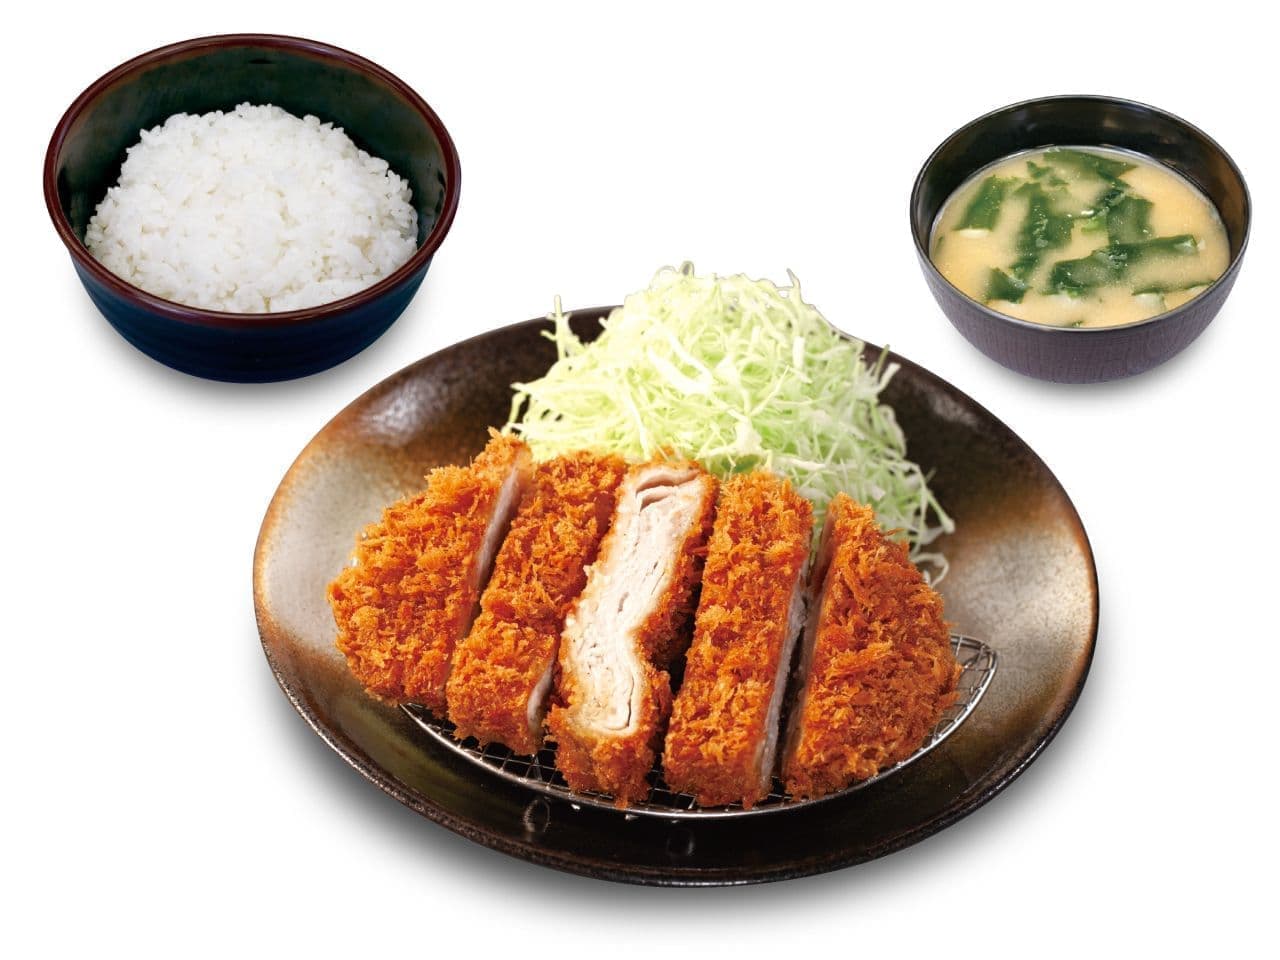 Matsunoya "Loin mille-feuille cutlet set meal